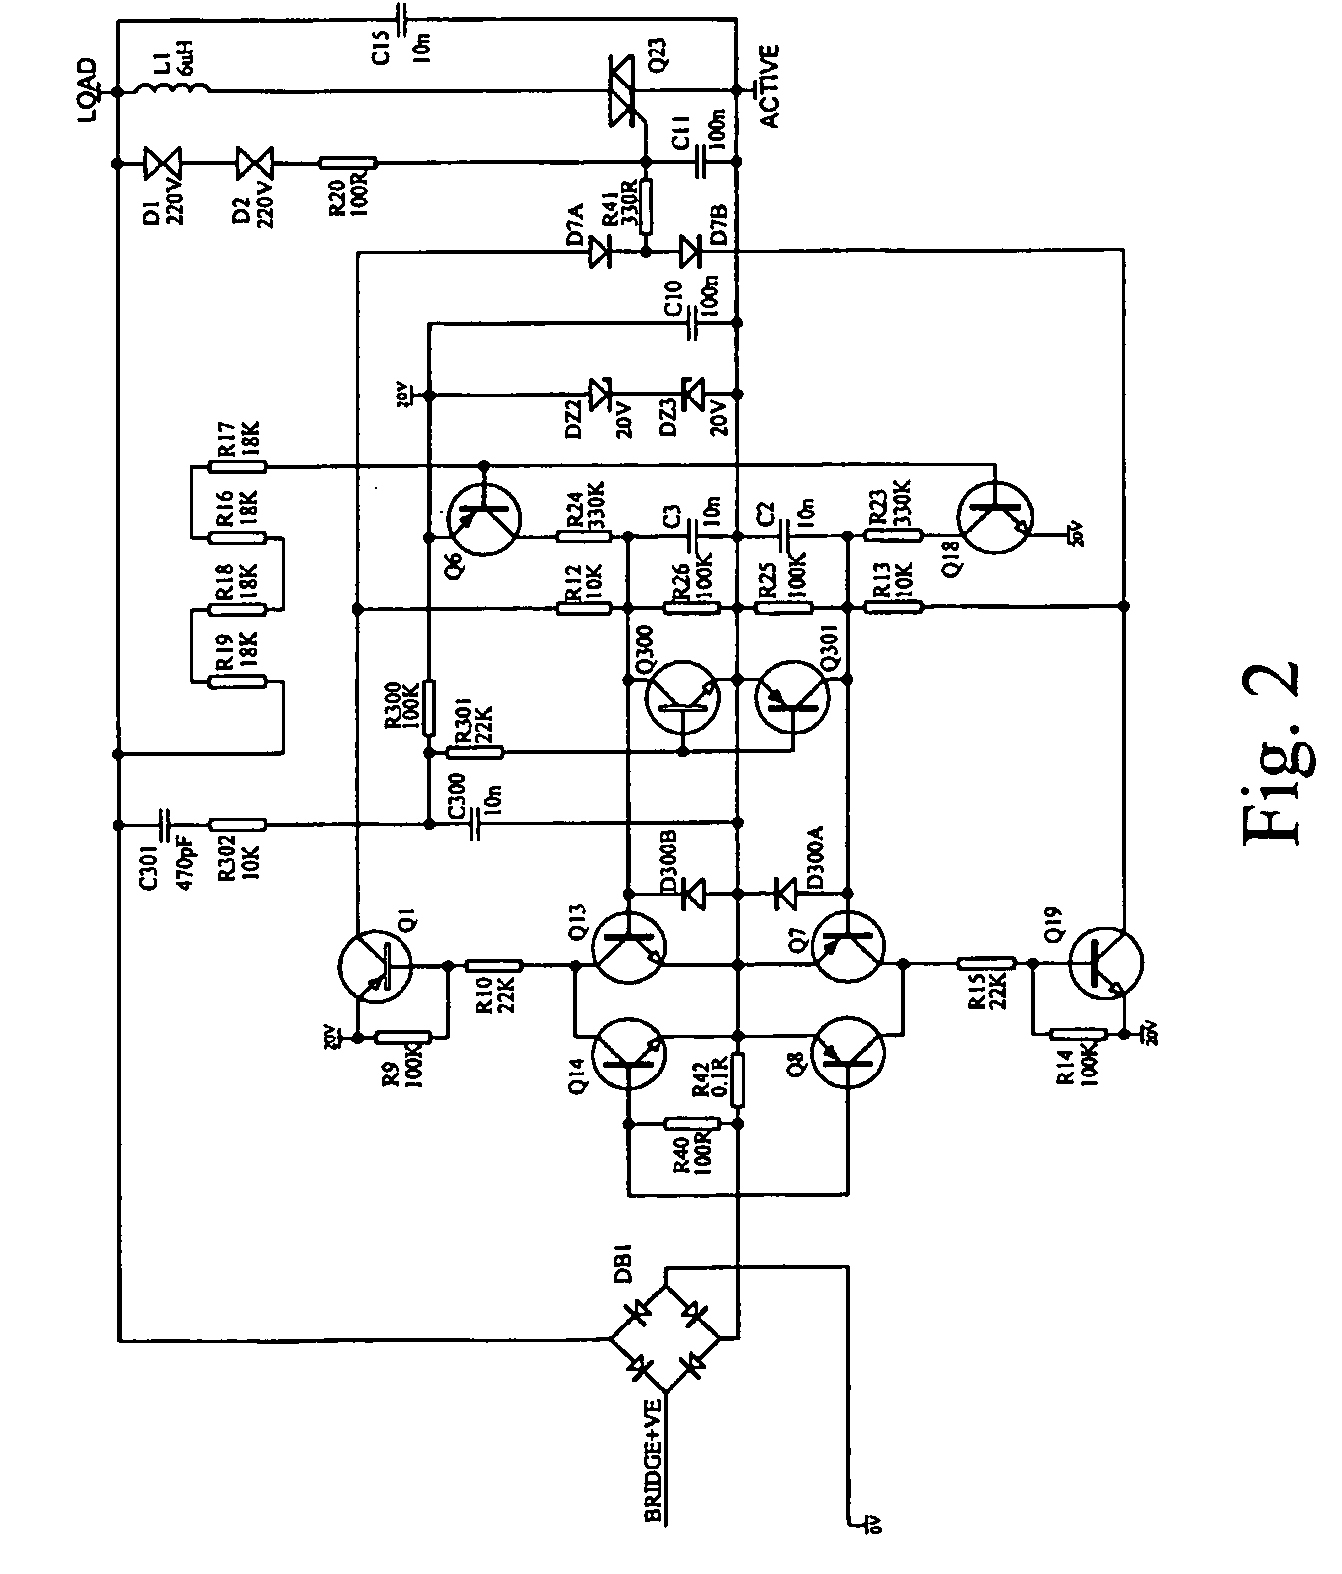 Dimmer circuit arrangement